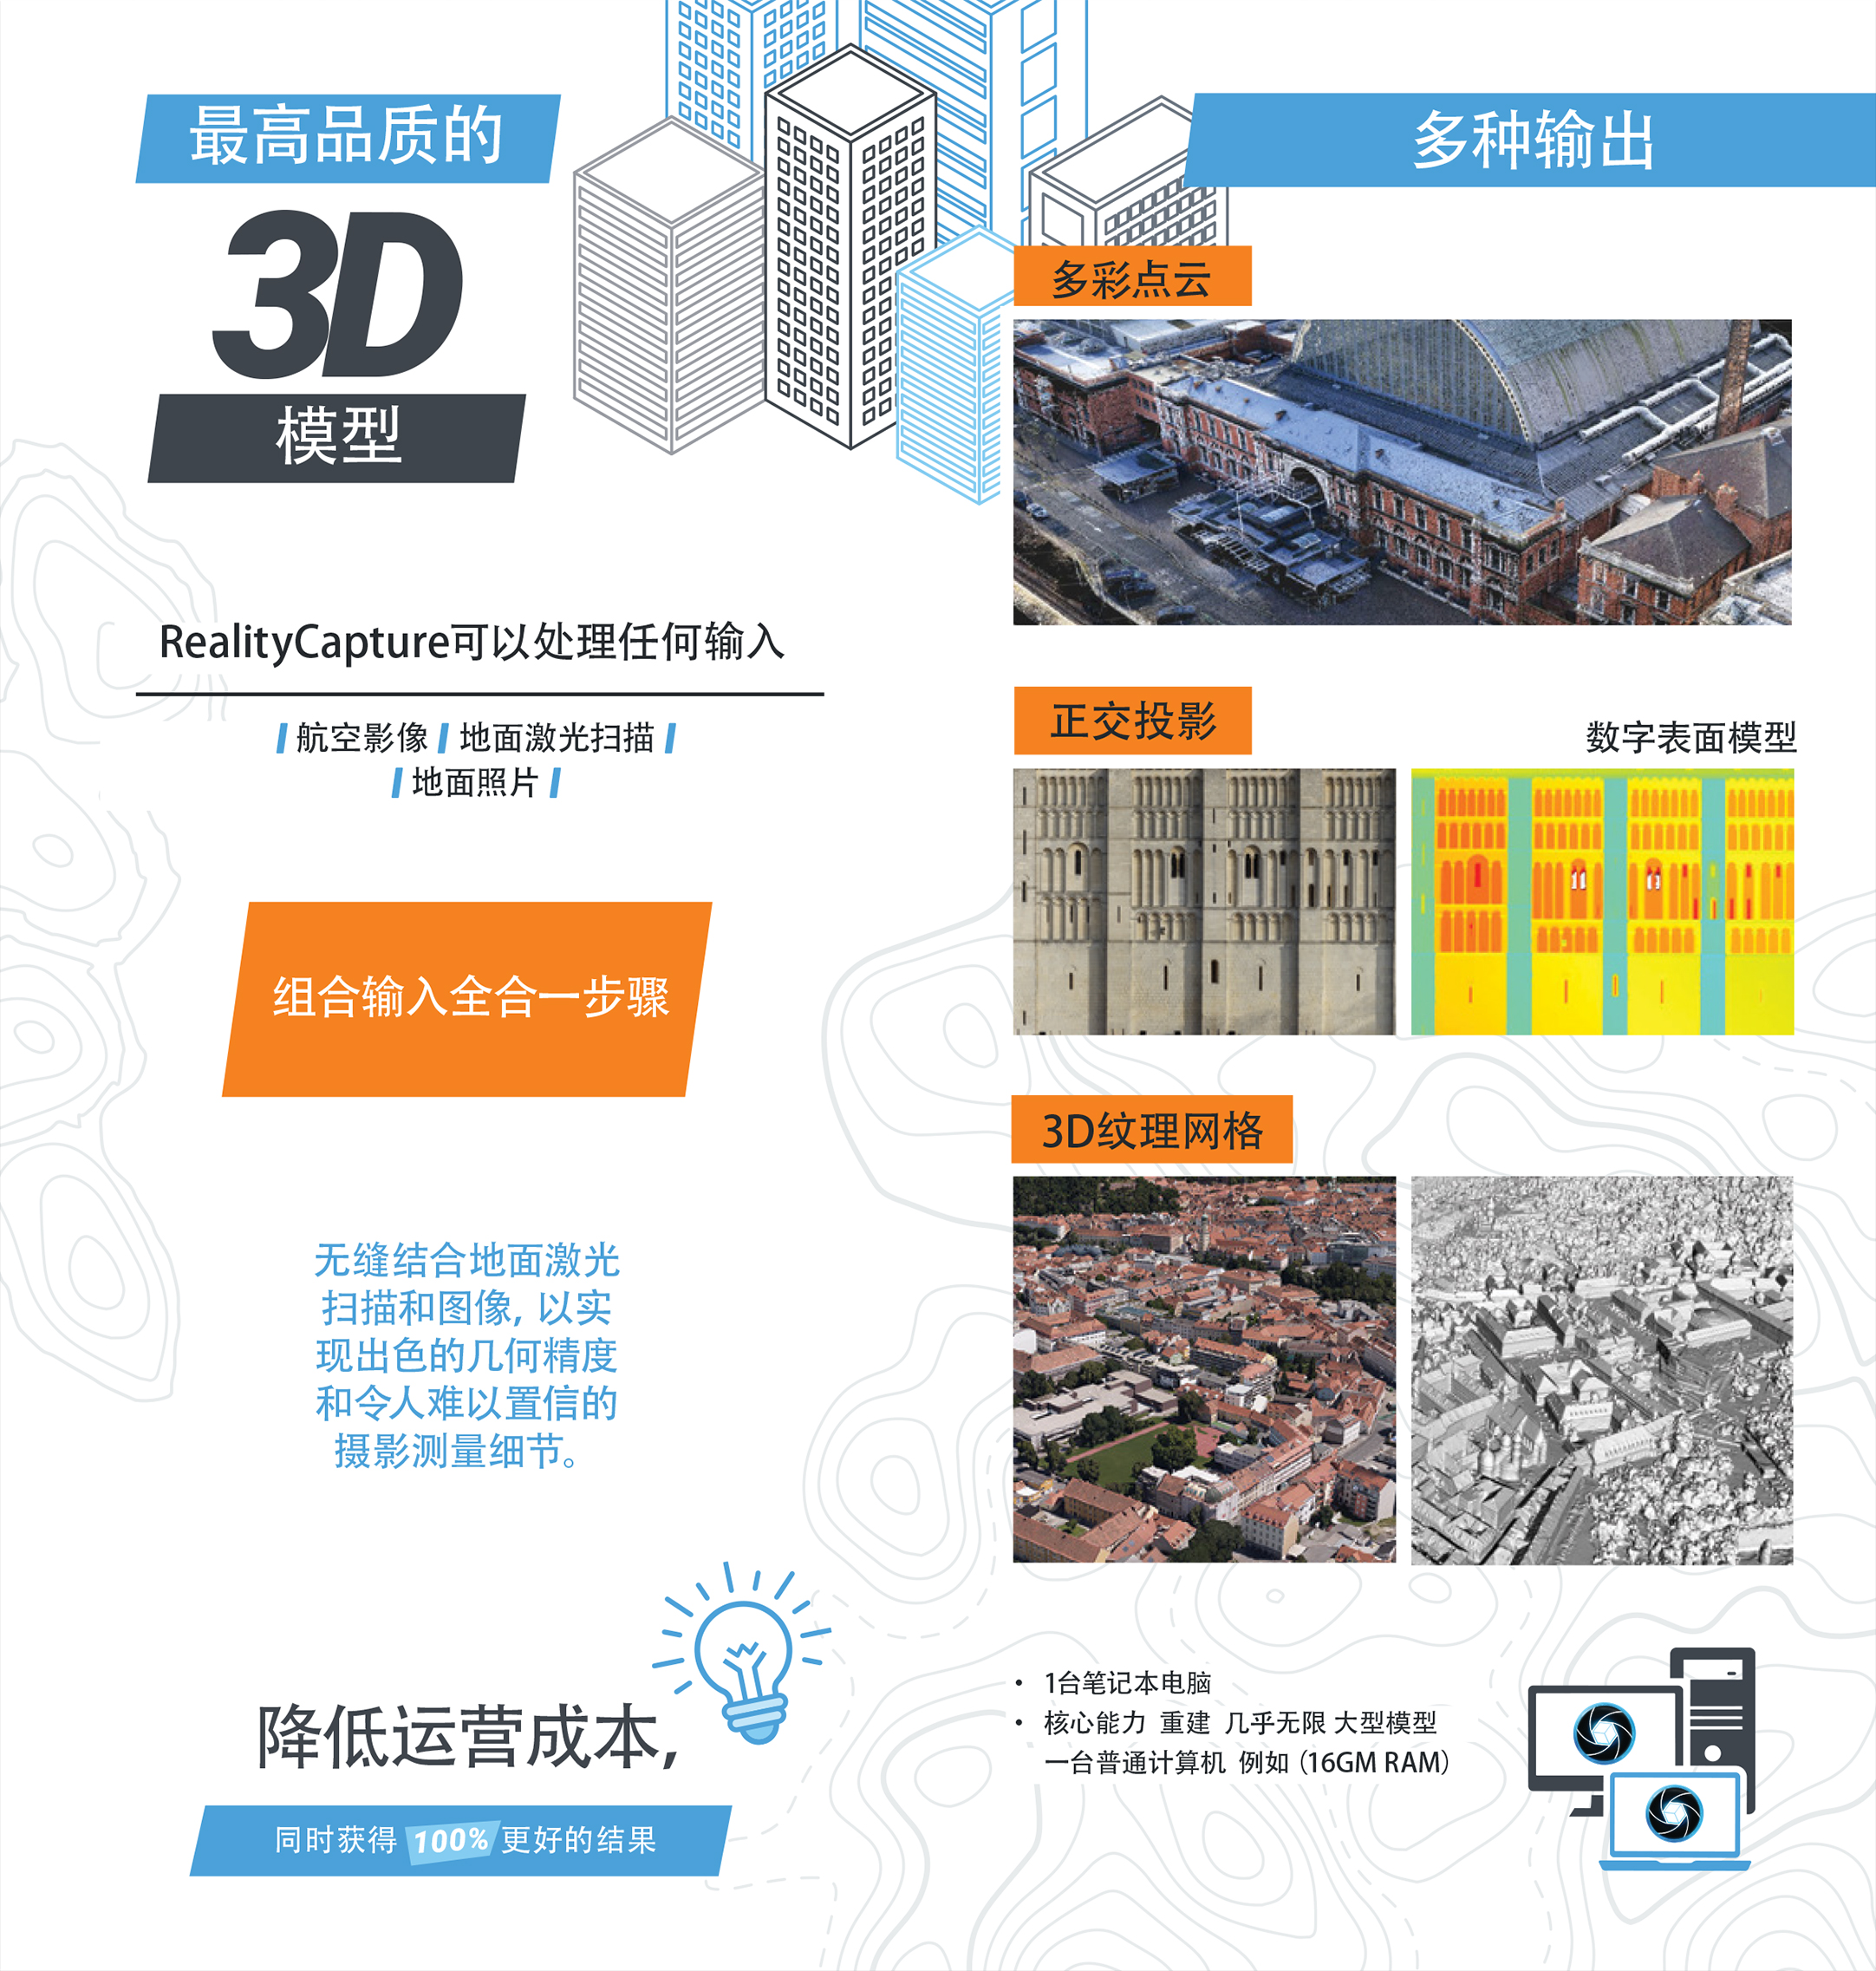 Brochure_600x210_CHINESE_FINAL-2_04.jpg